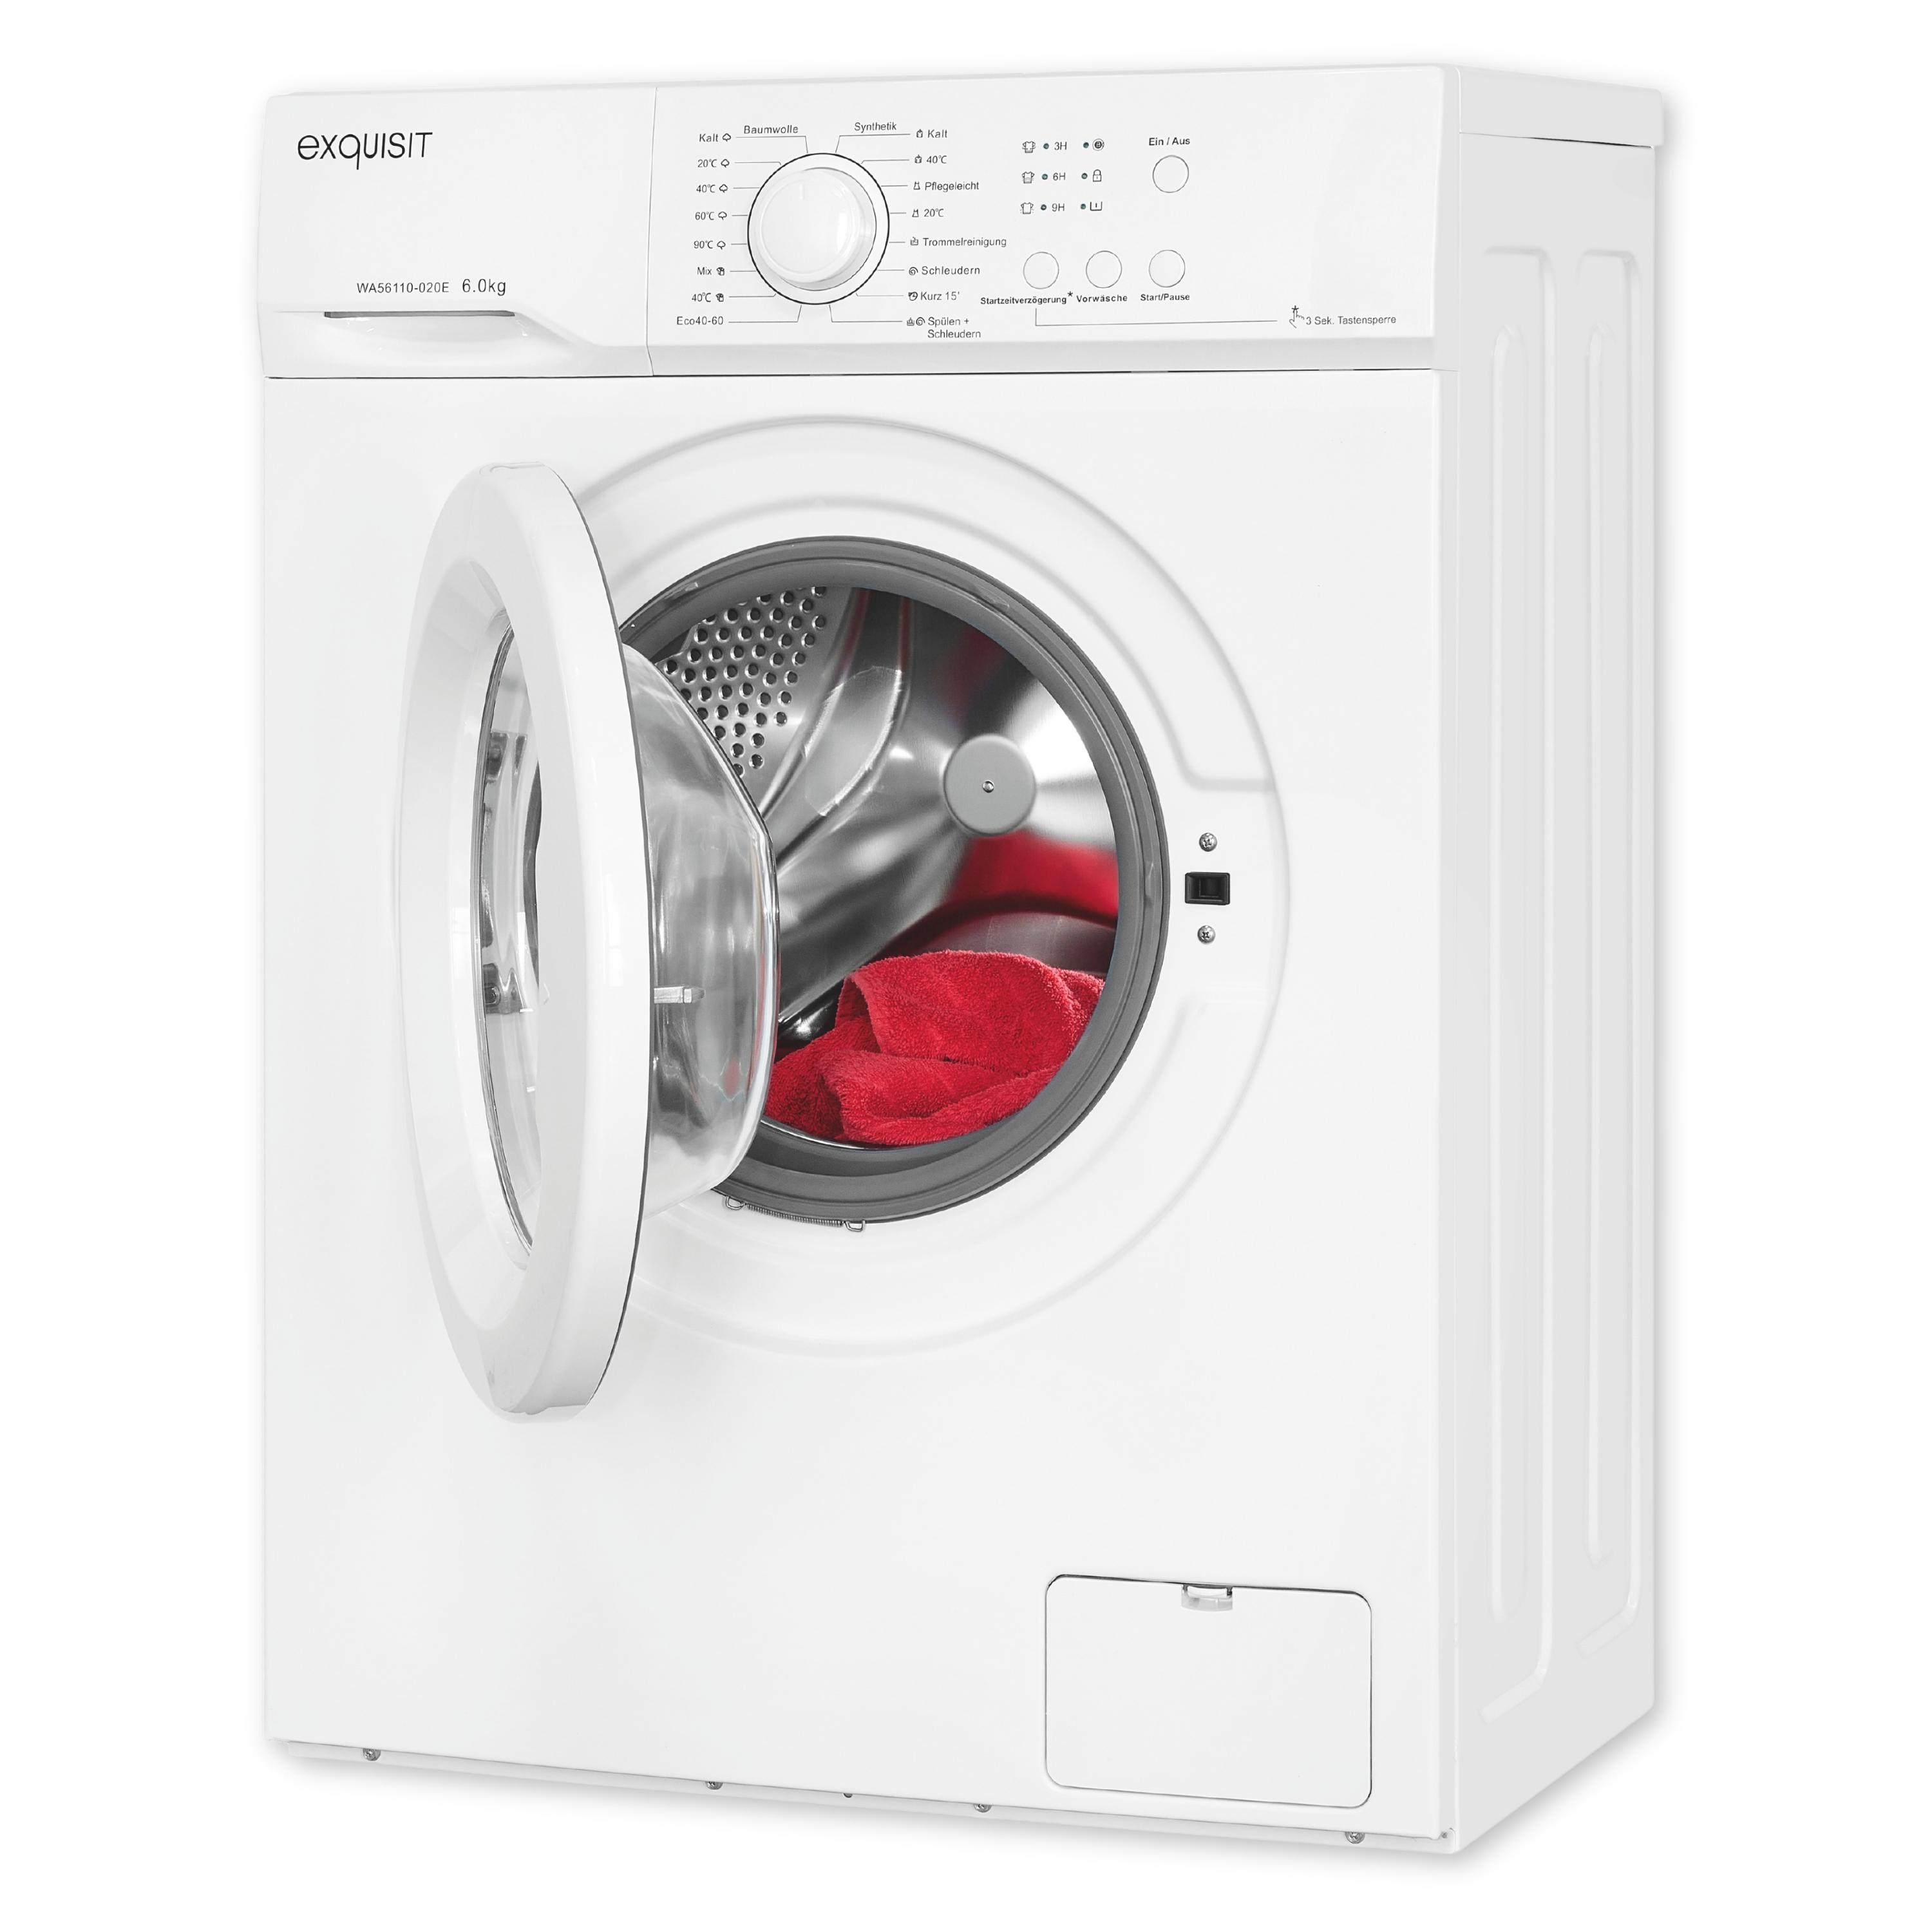 EXQUISIT WA56110-020E Waschmaschine kg, (6,0 E)